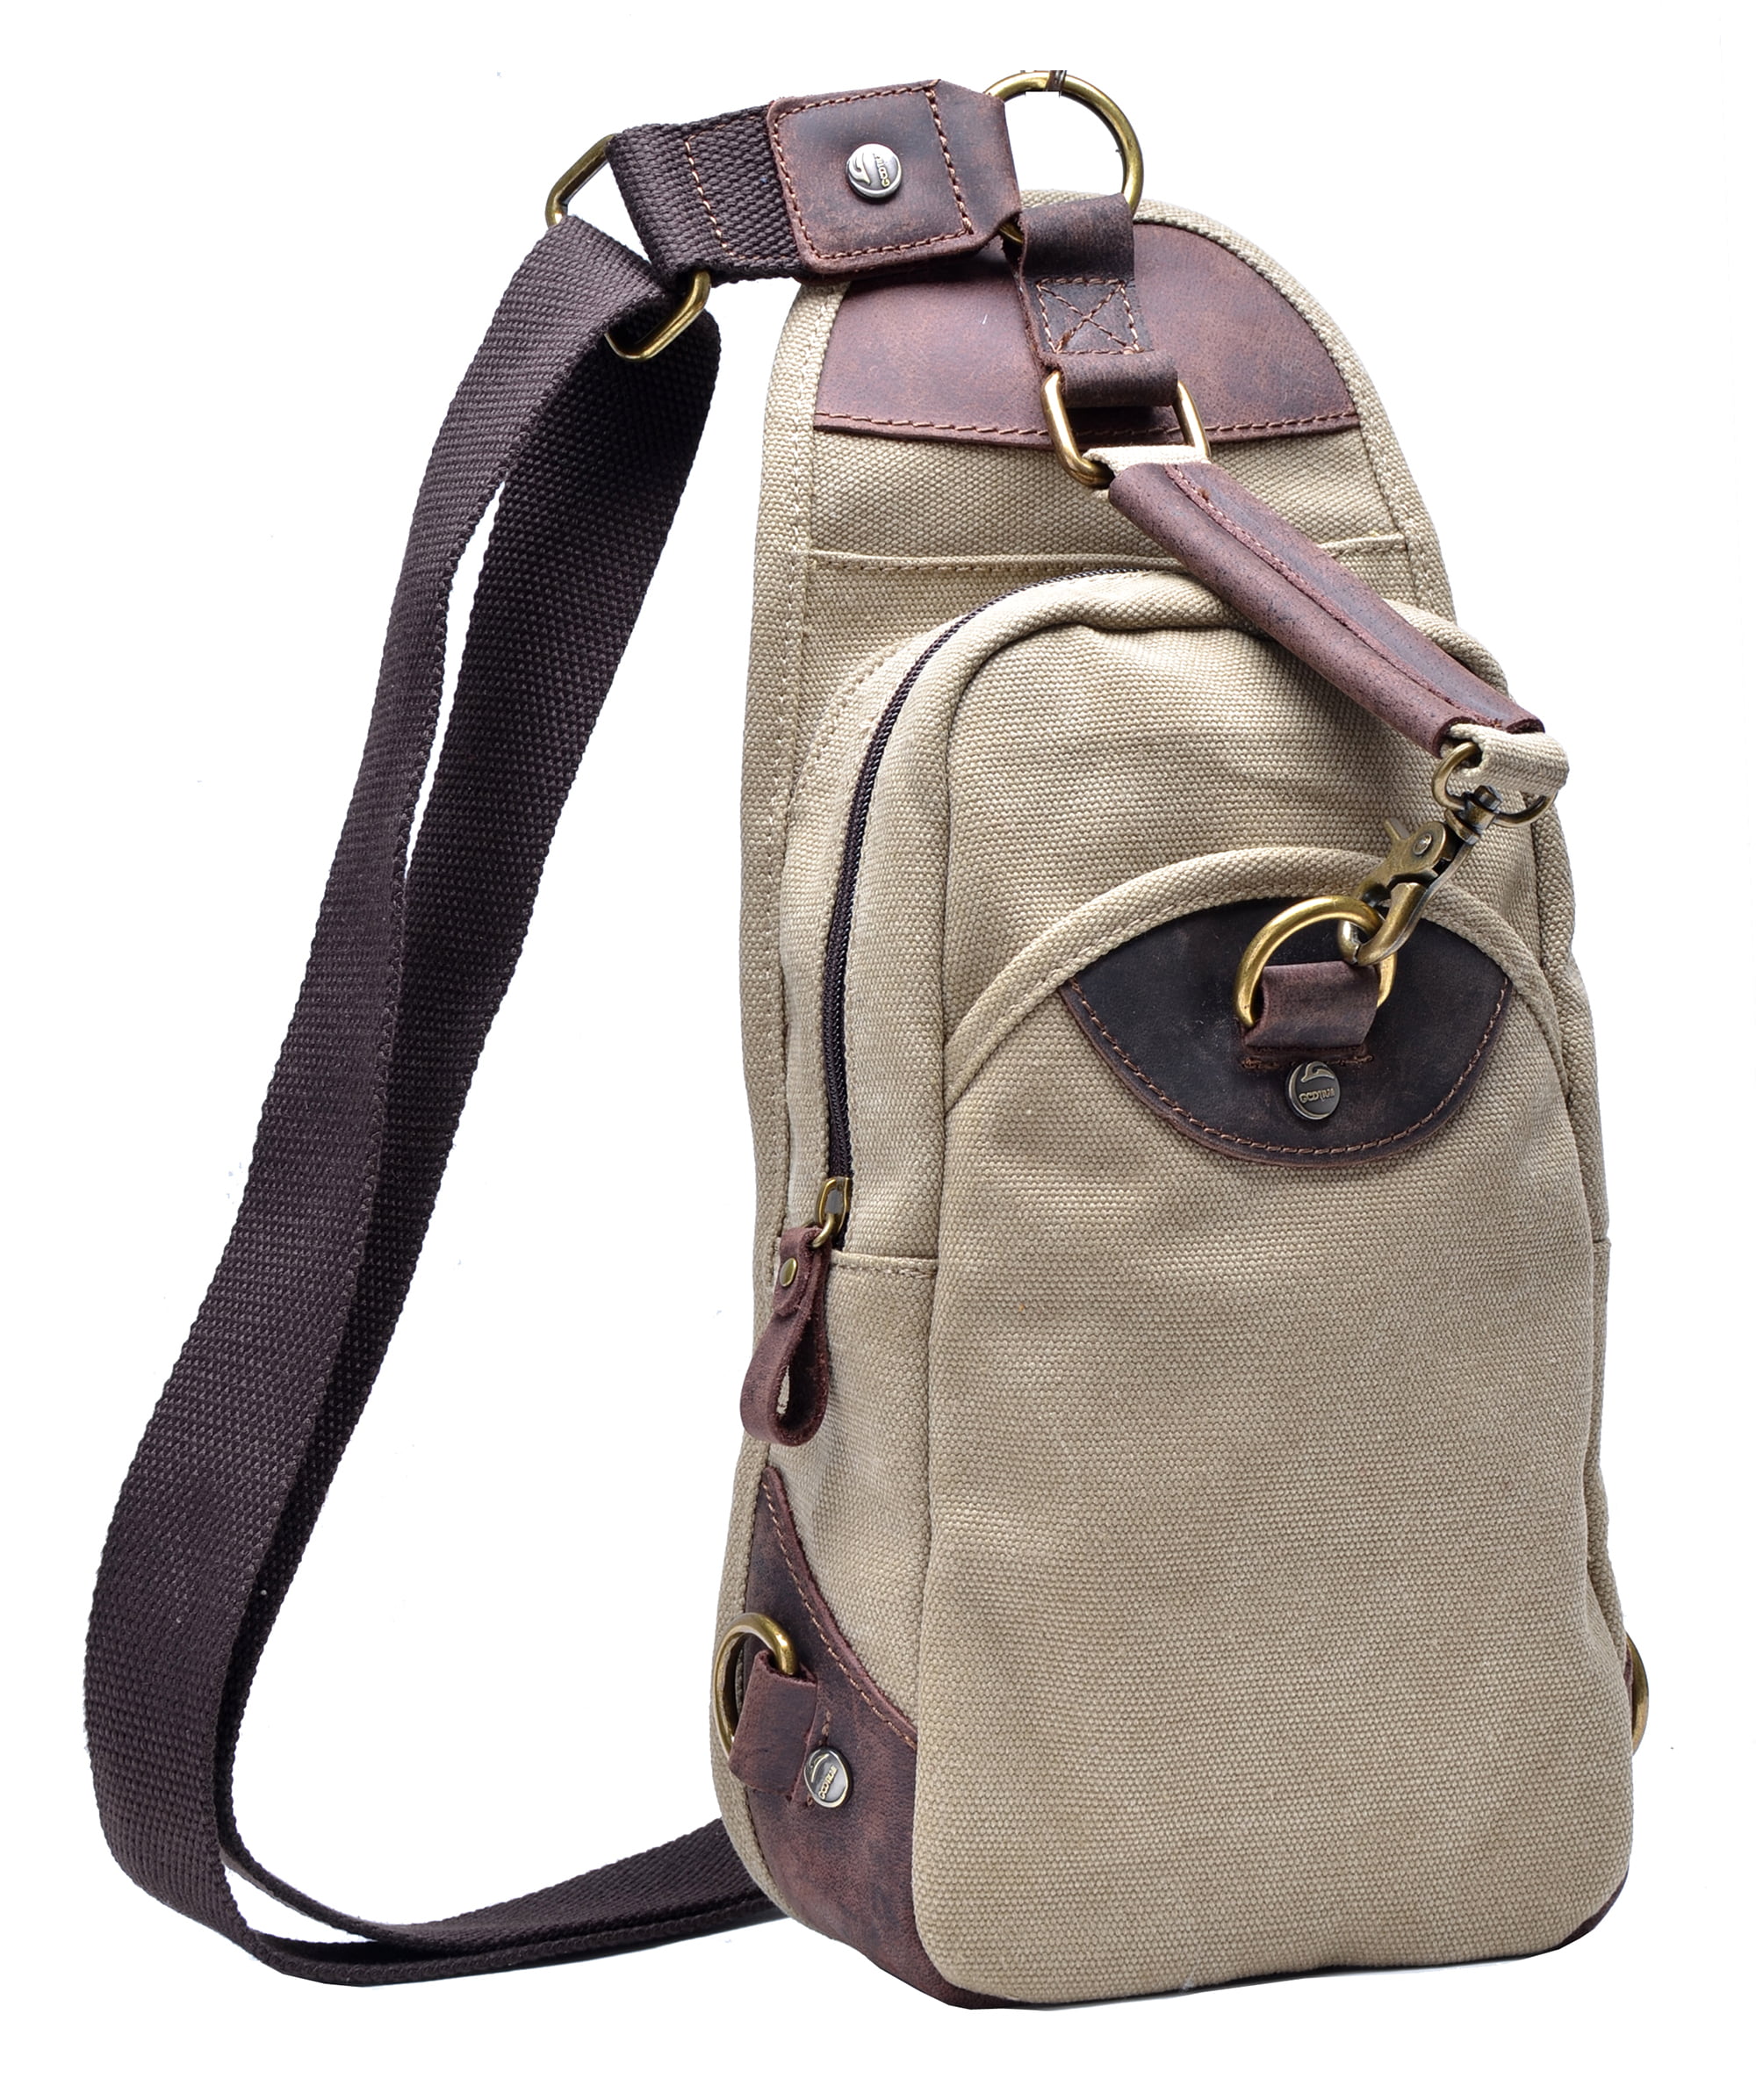 Gootium Canvas Chest Pack Vintage Crossbody Bag Leather Shoulder Sling Backpack, Army Green